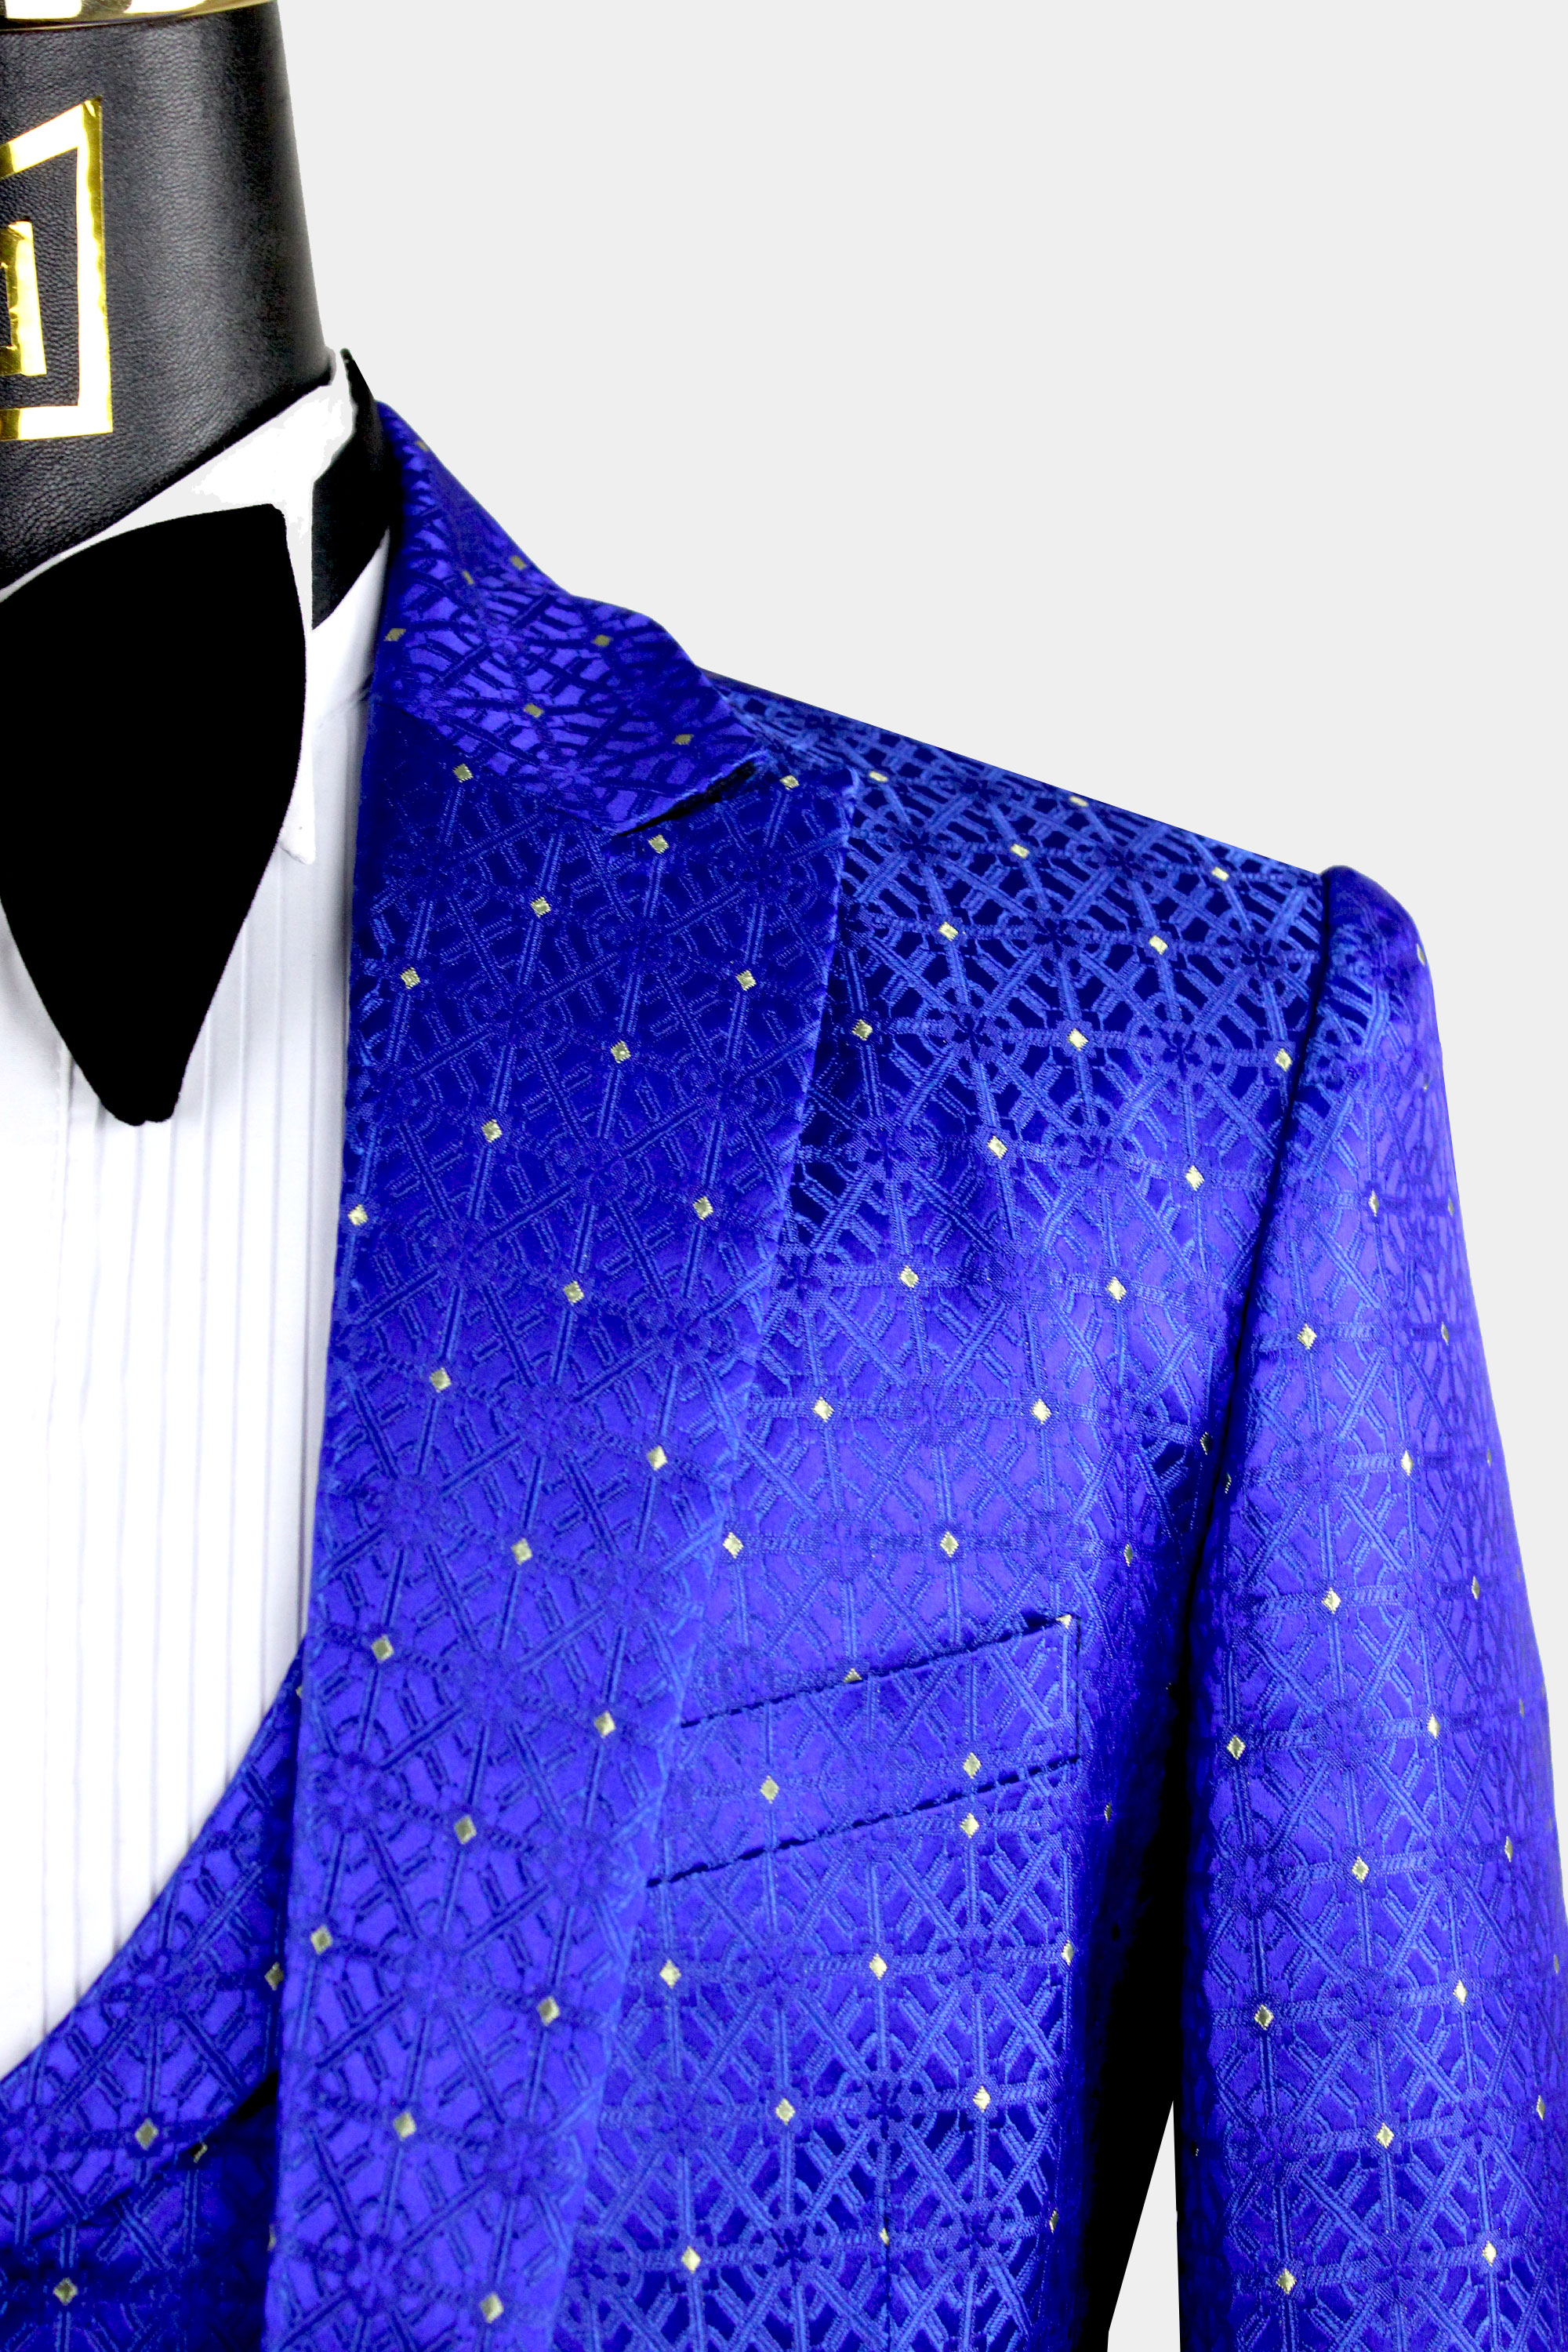 Bright-Blue-Suit-from-Gentlemansguru.com